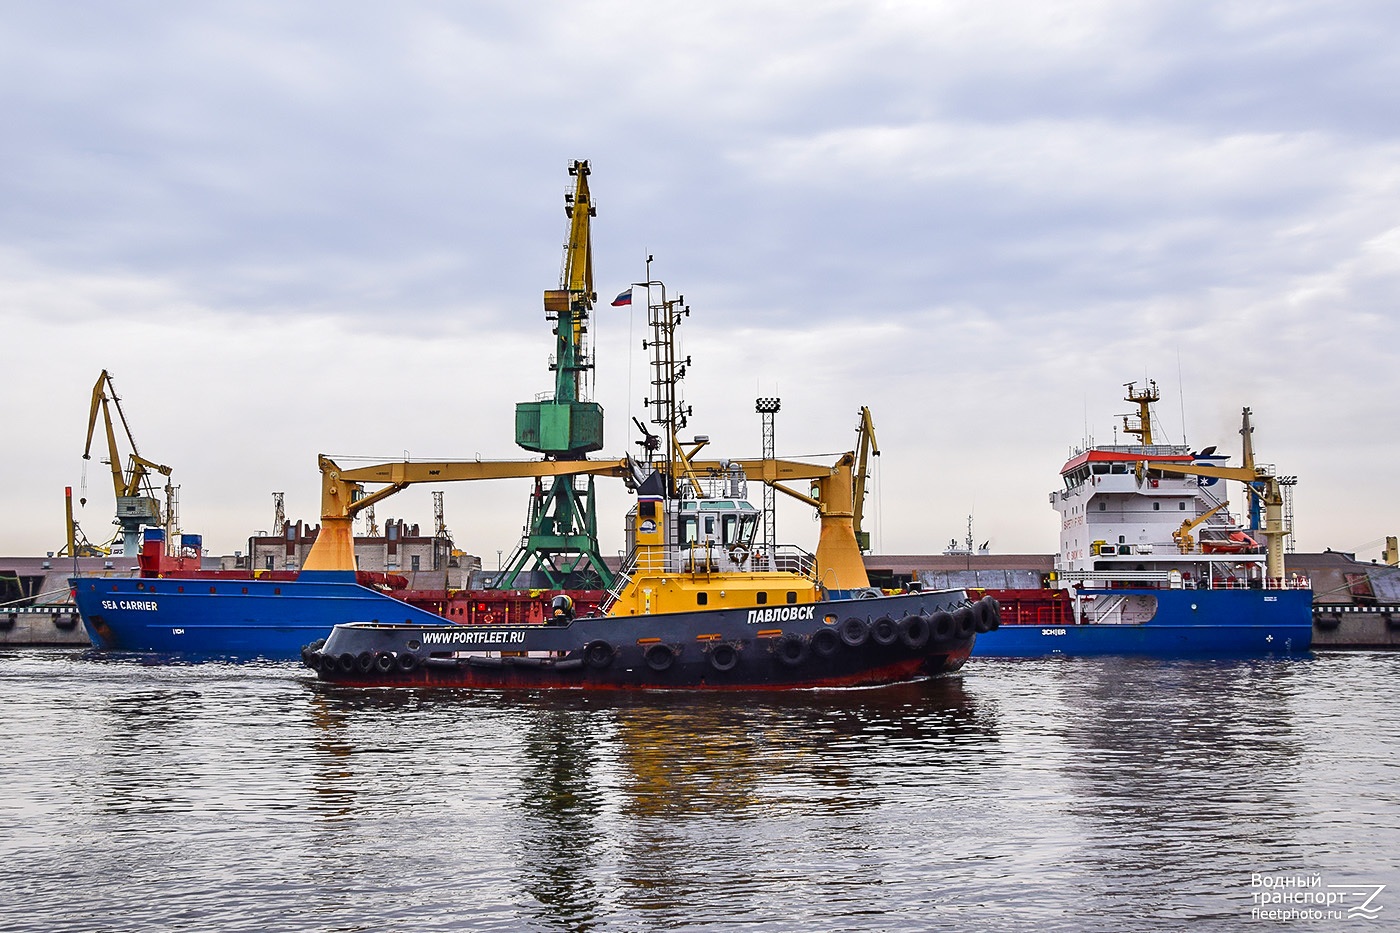 Павловск, Sea Carrier